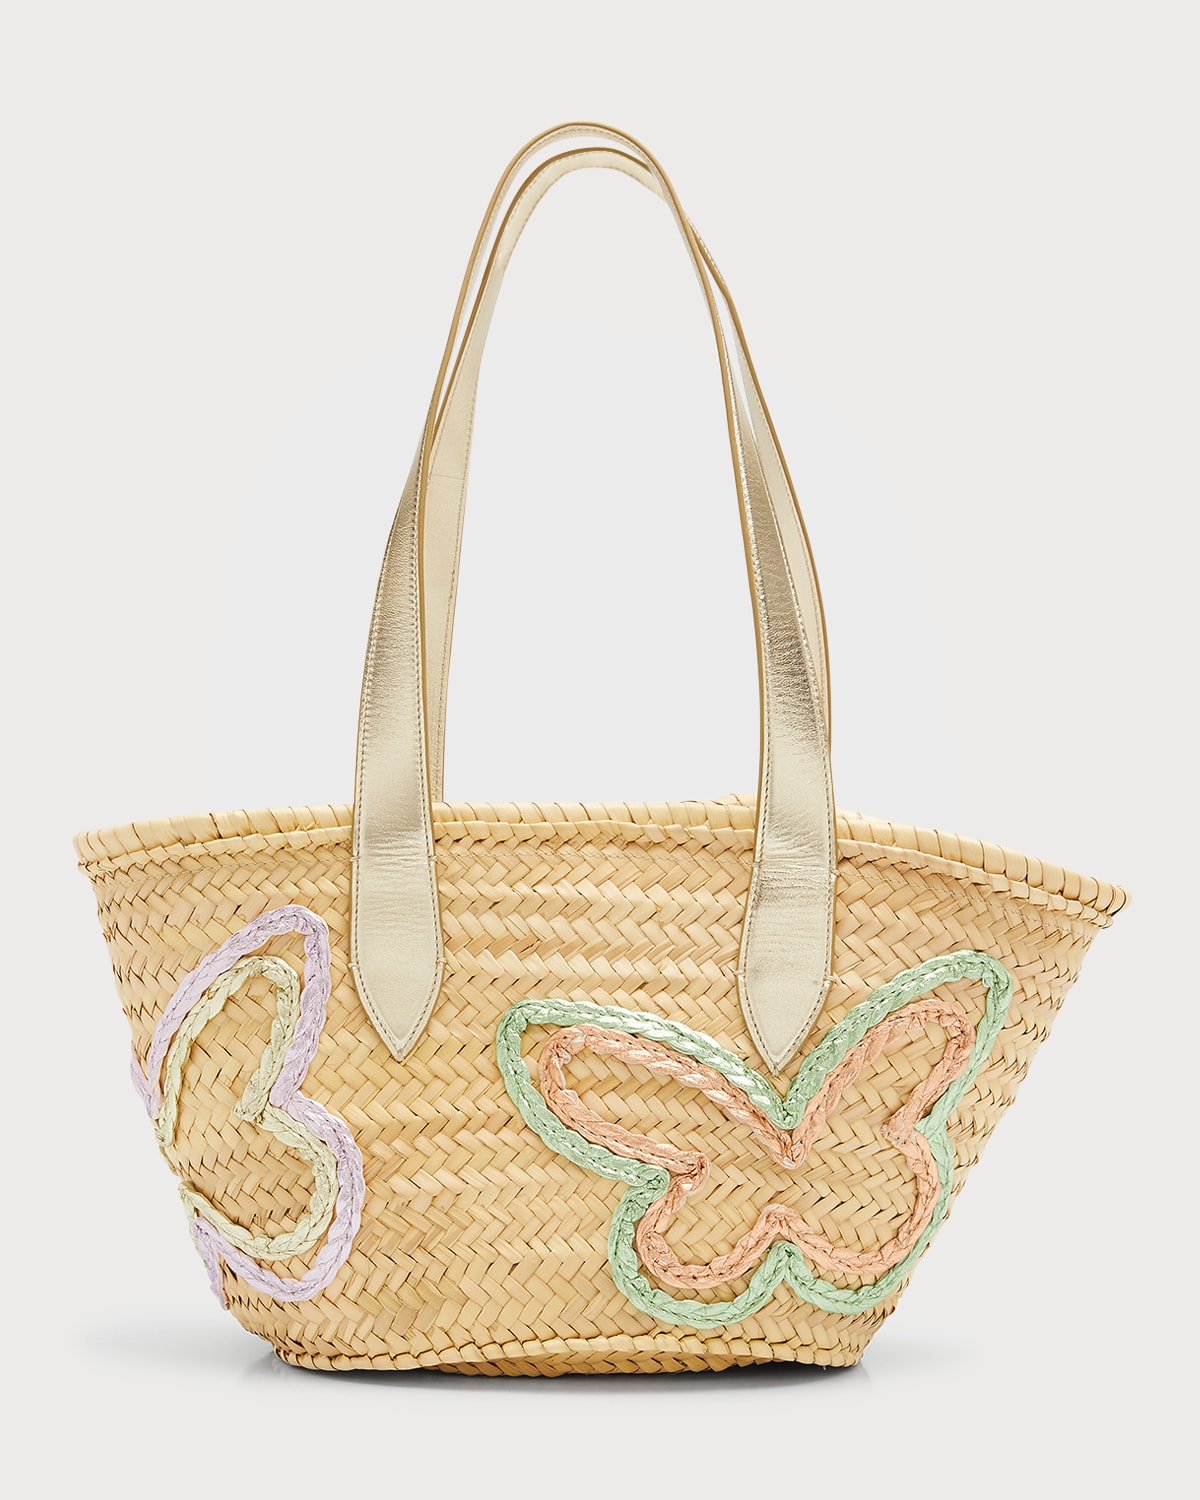 Sophia Webster Taya Butterfly Raffia Tote Bag In Pastel Mix